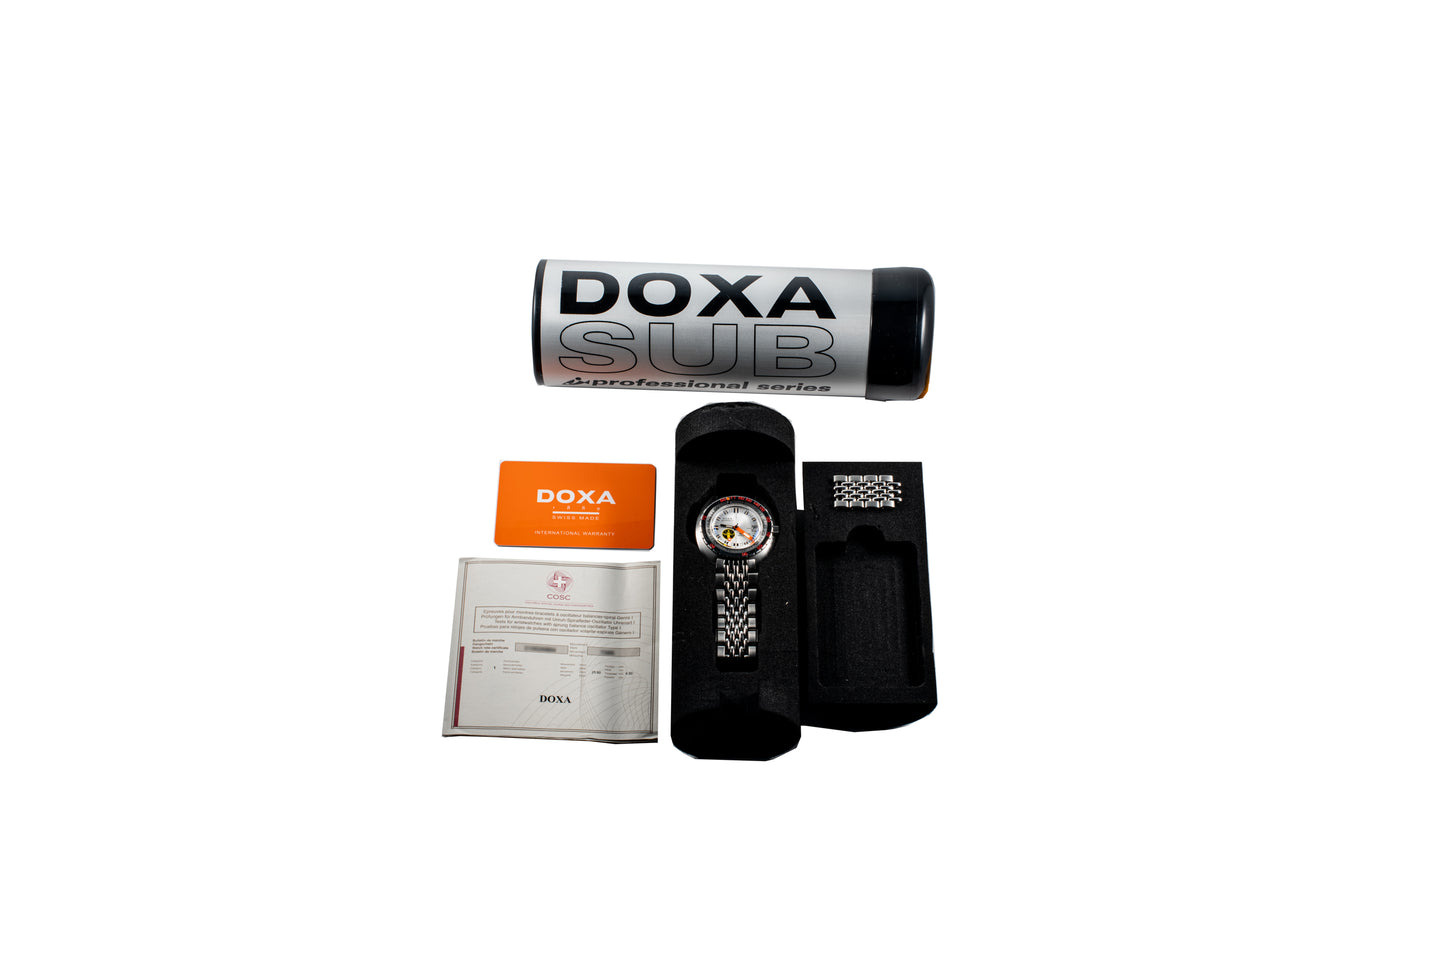 DOXA Sub 300 Searambler 'Silver Lung'